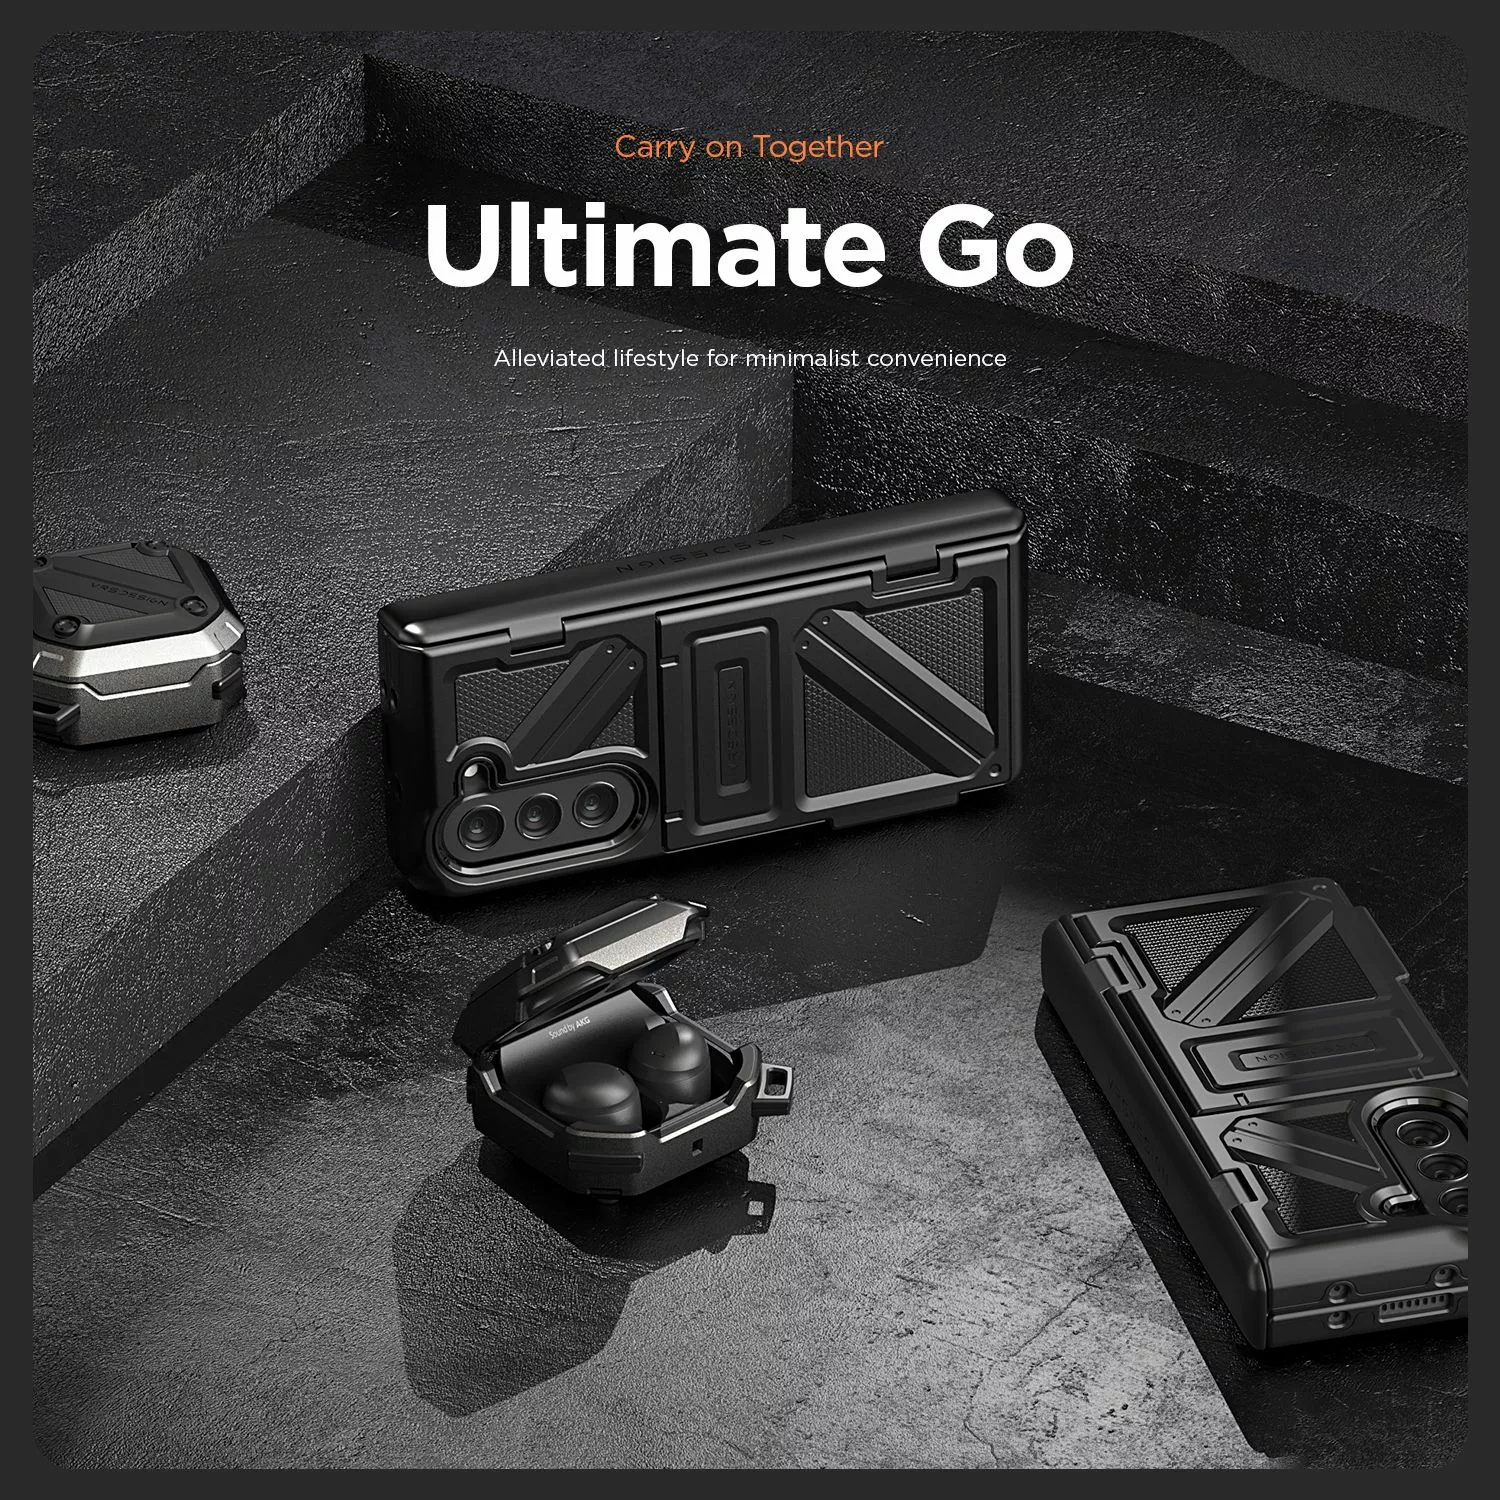 VRS รุ่น Terra Guard Ultimate Go - เคส Galaxy Z Fold 5 - สี Matte Black (แถมฟิล์มหน้าจอ)